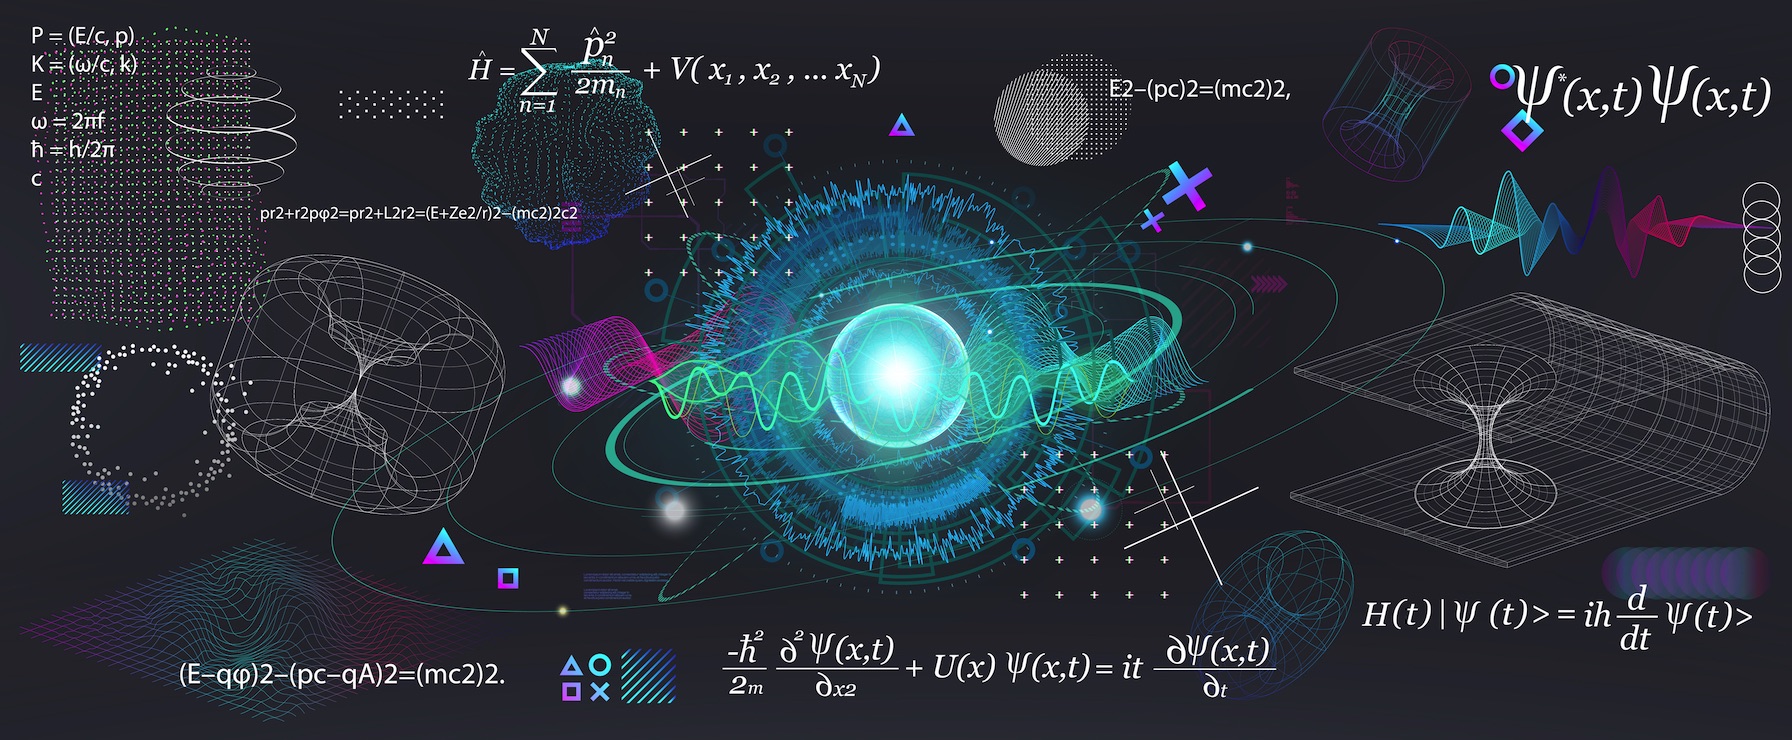 graphic with quantum mechanic equations